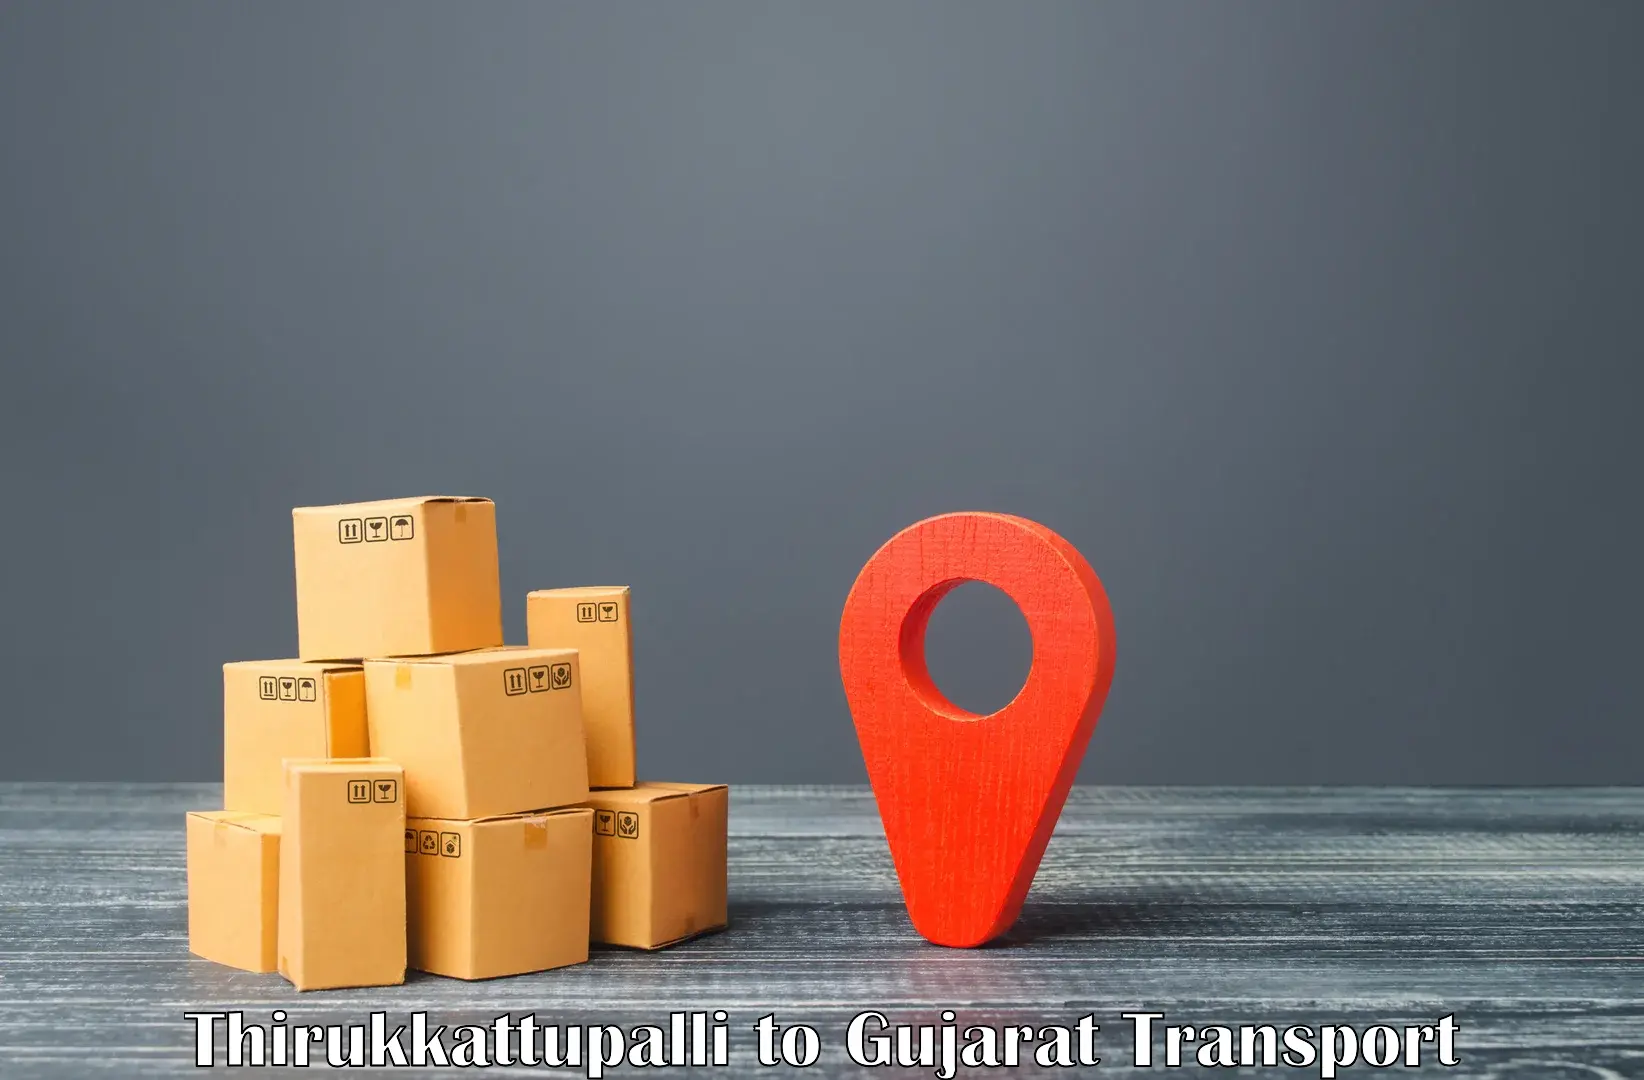 Daily parcel service transport in Thirukkattupalli to Mandvi